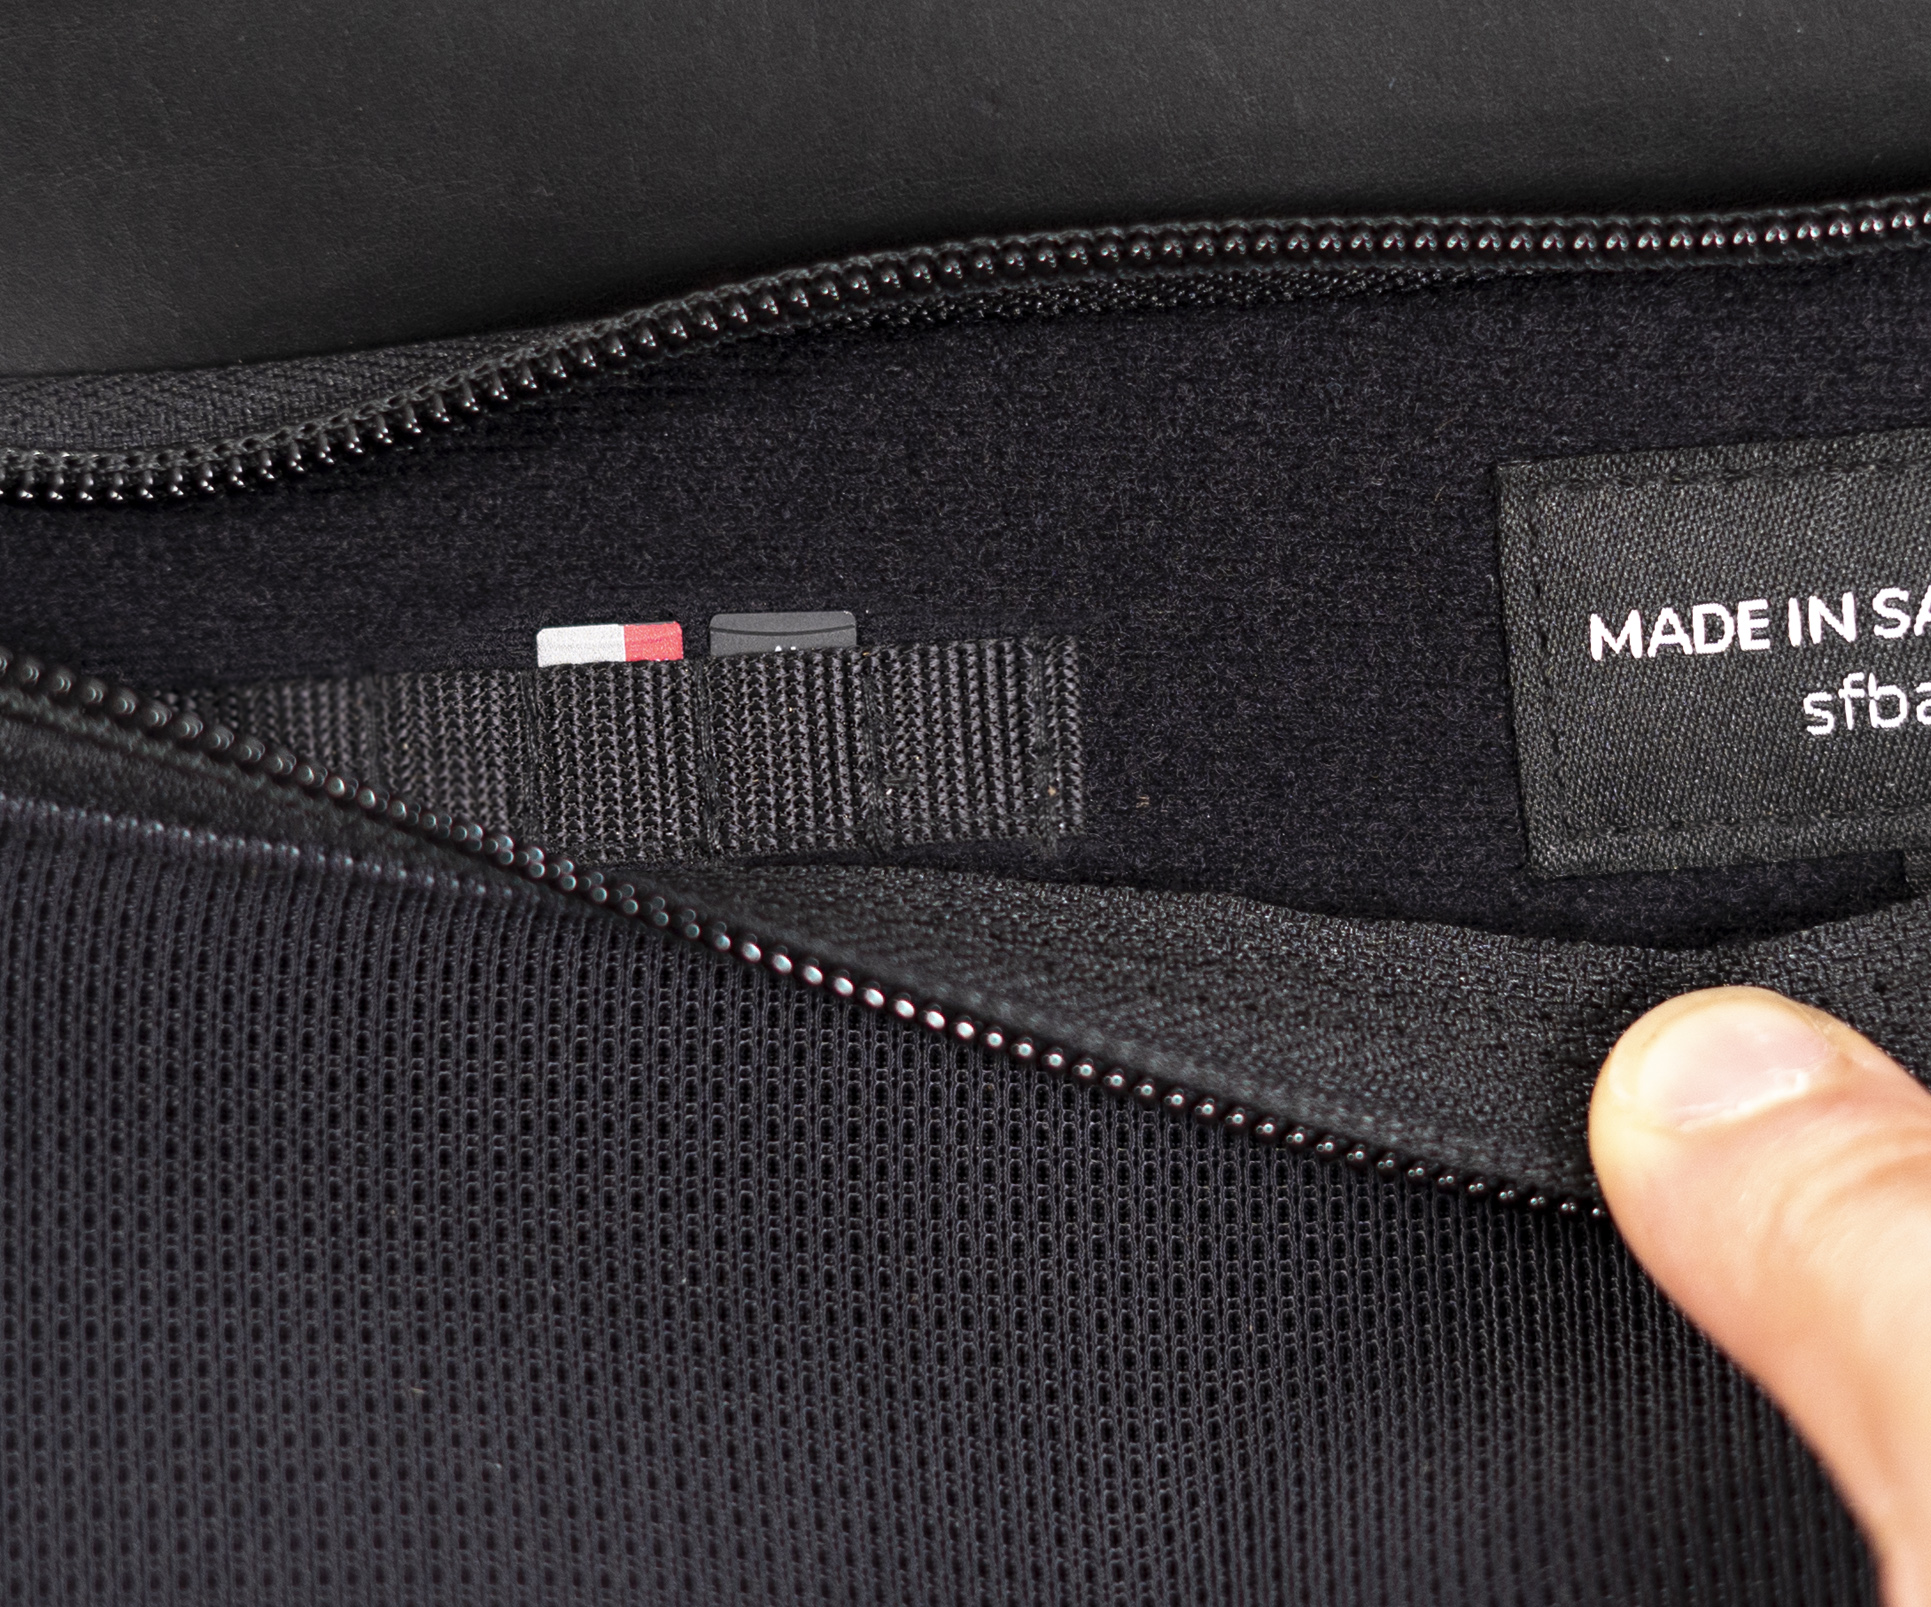 Micro SD game pockets inside back zippered pocket